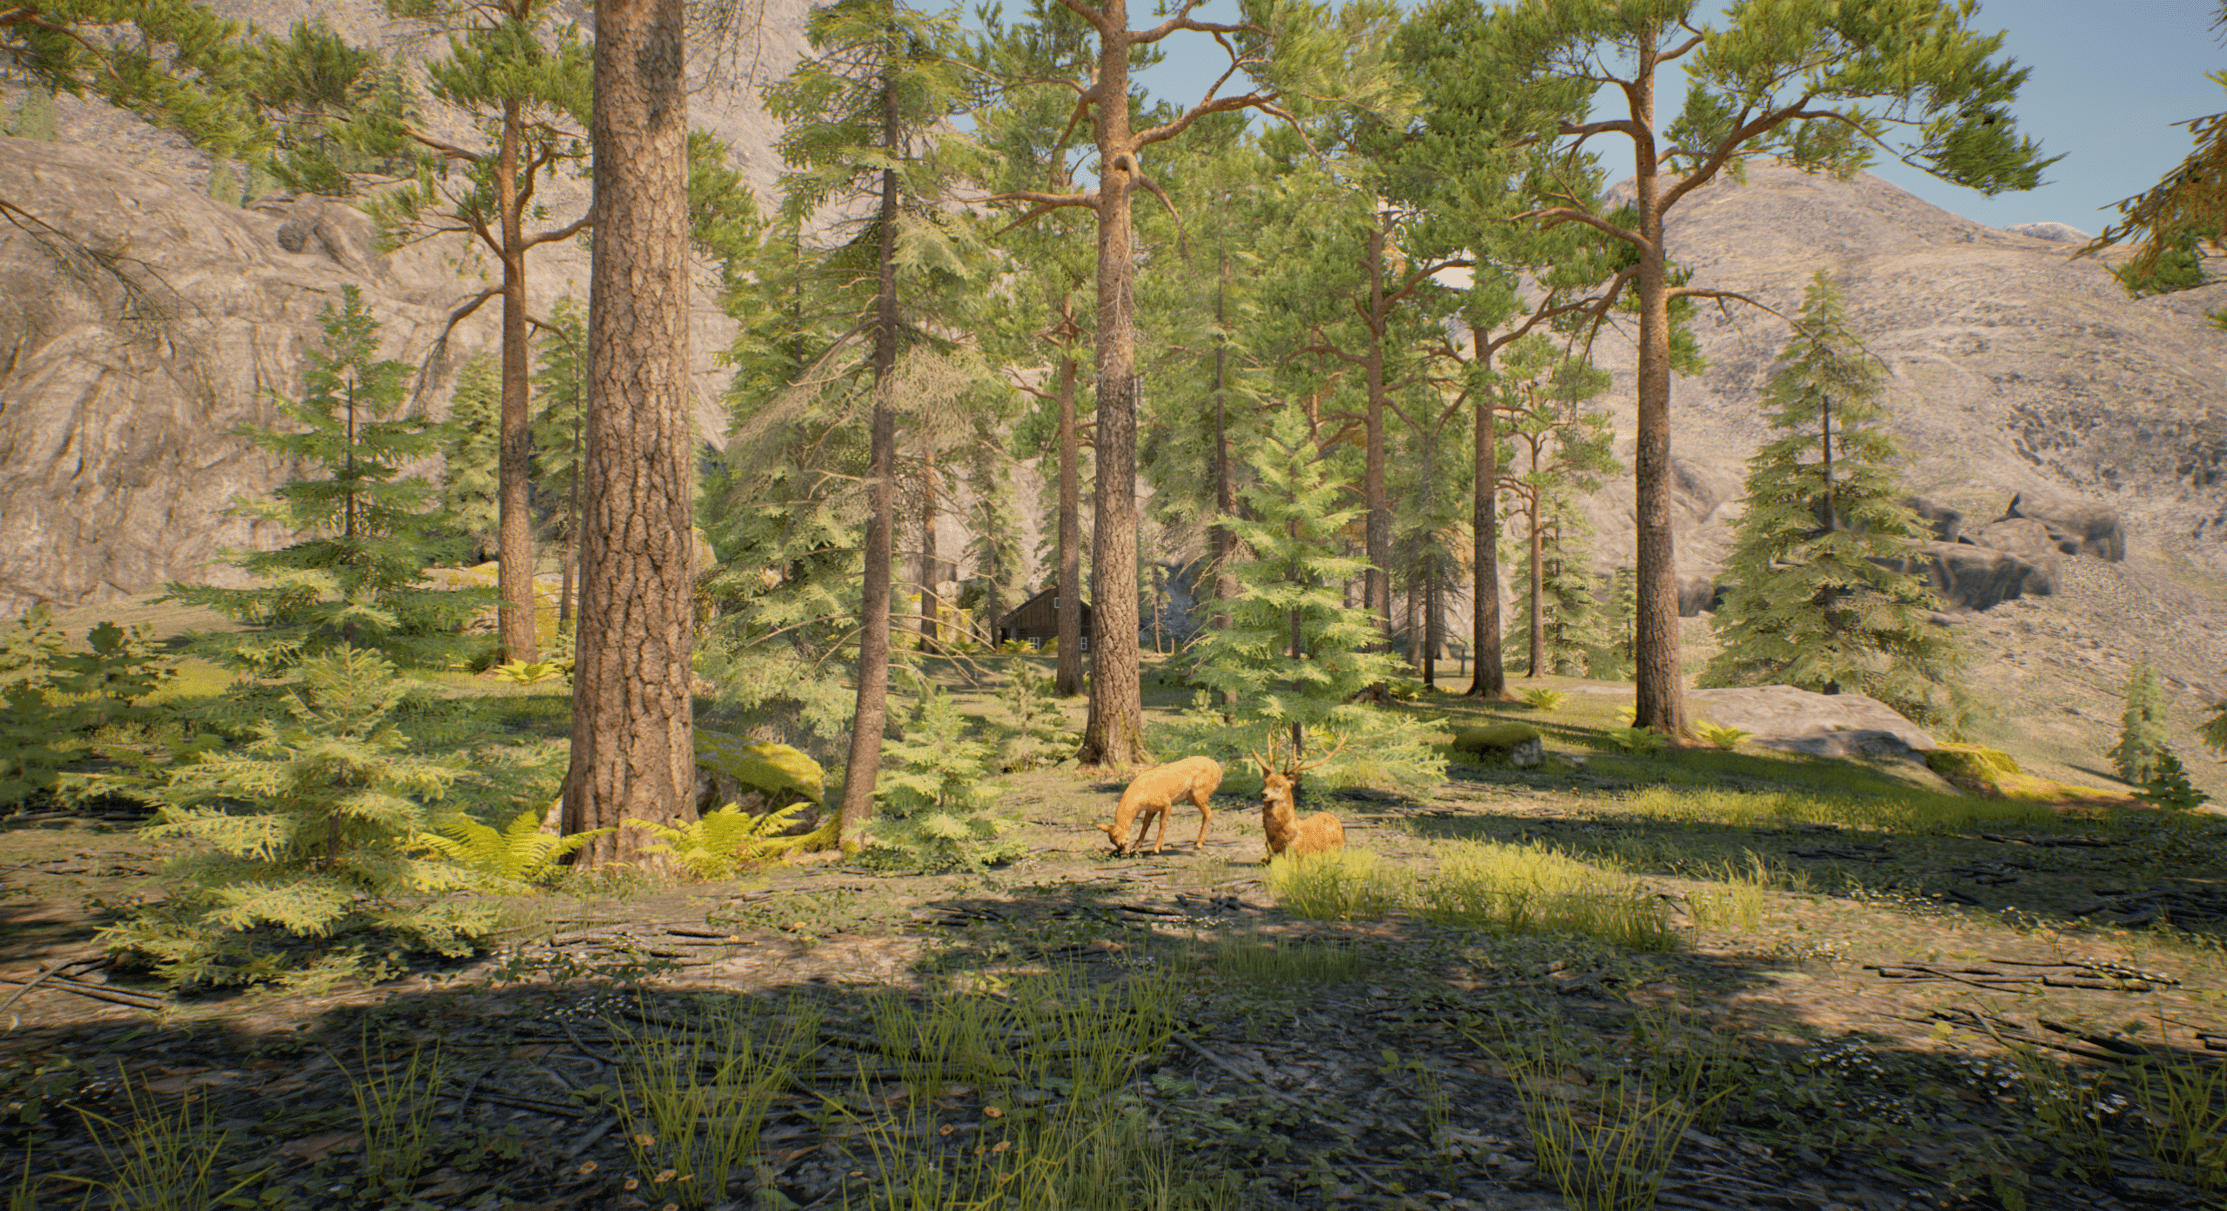 Ranch Simulator, Ep4, Unreal Engine 5 Update